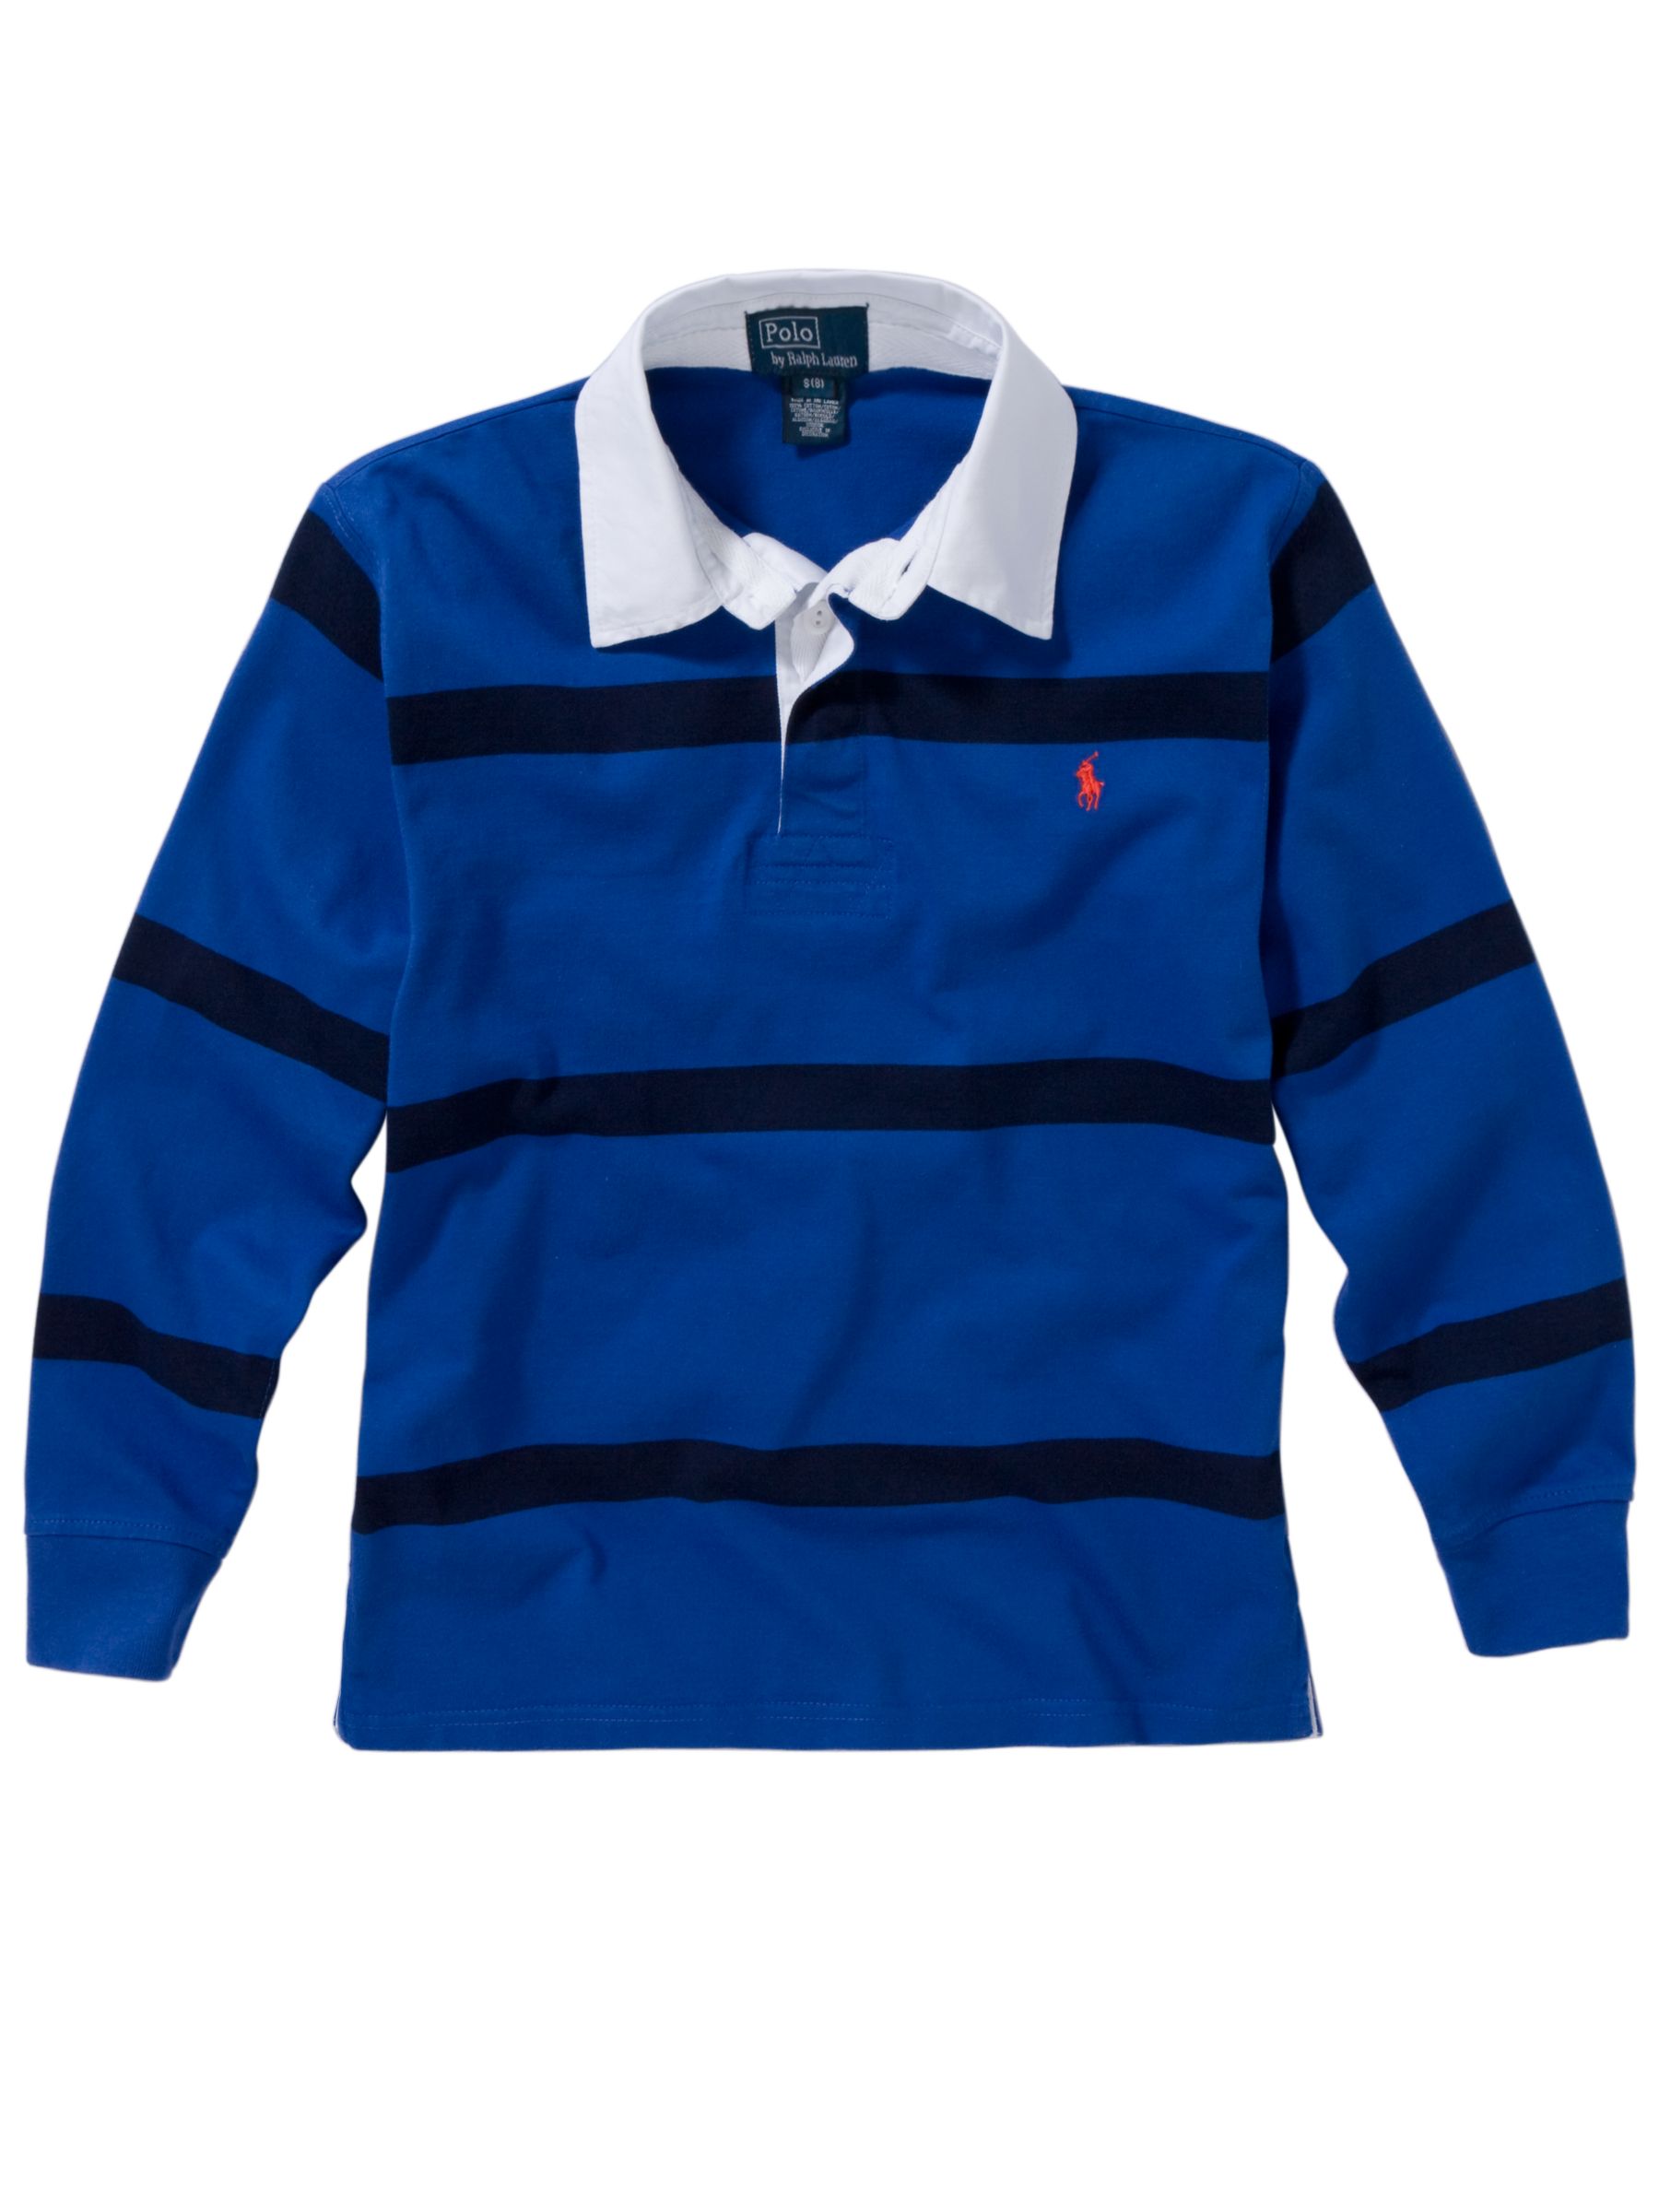 Polo Ralph Lauren Rugby Shirt, Blue, 2 years